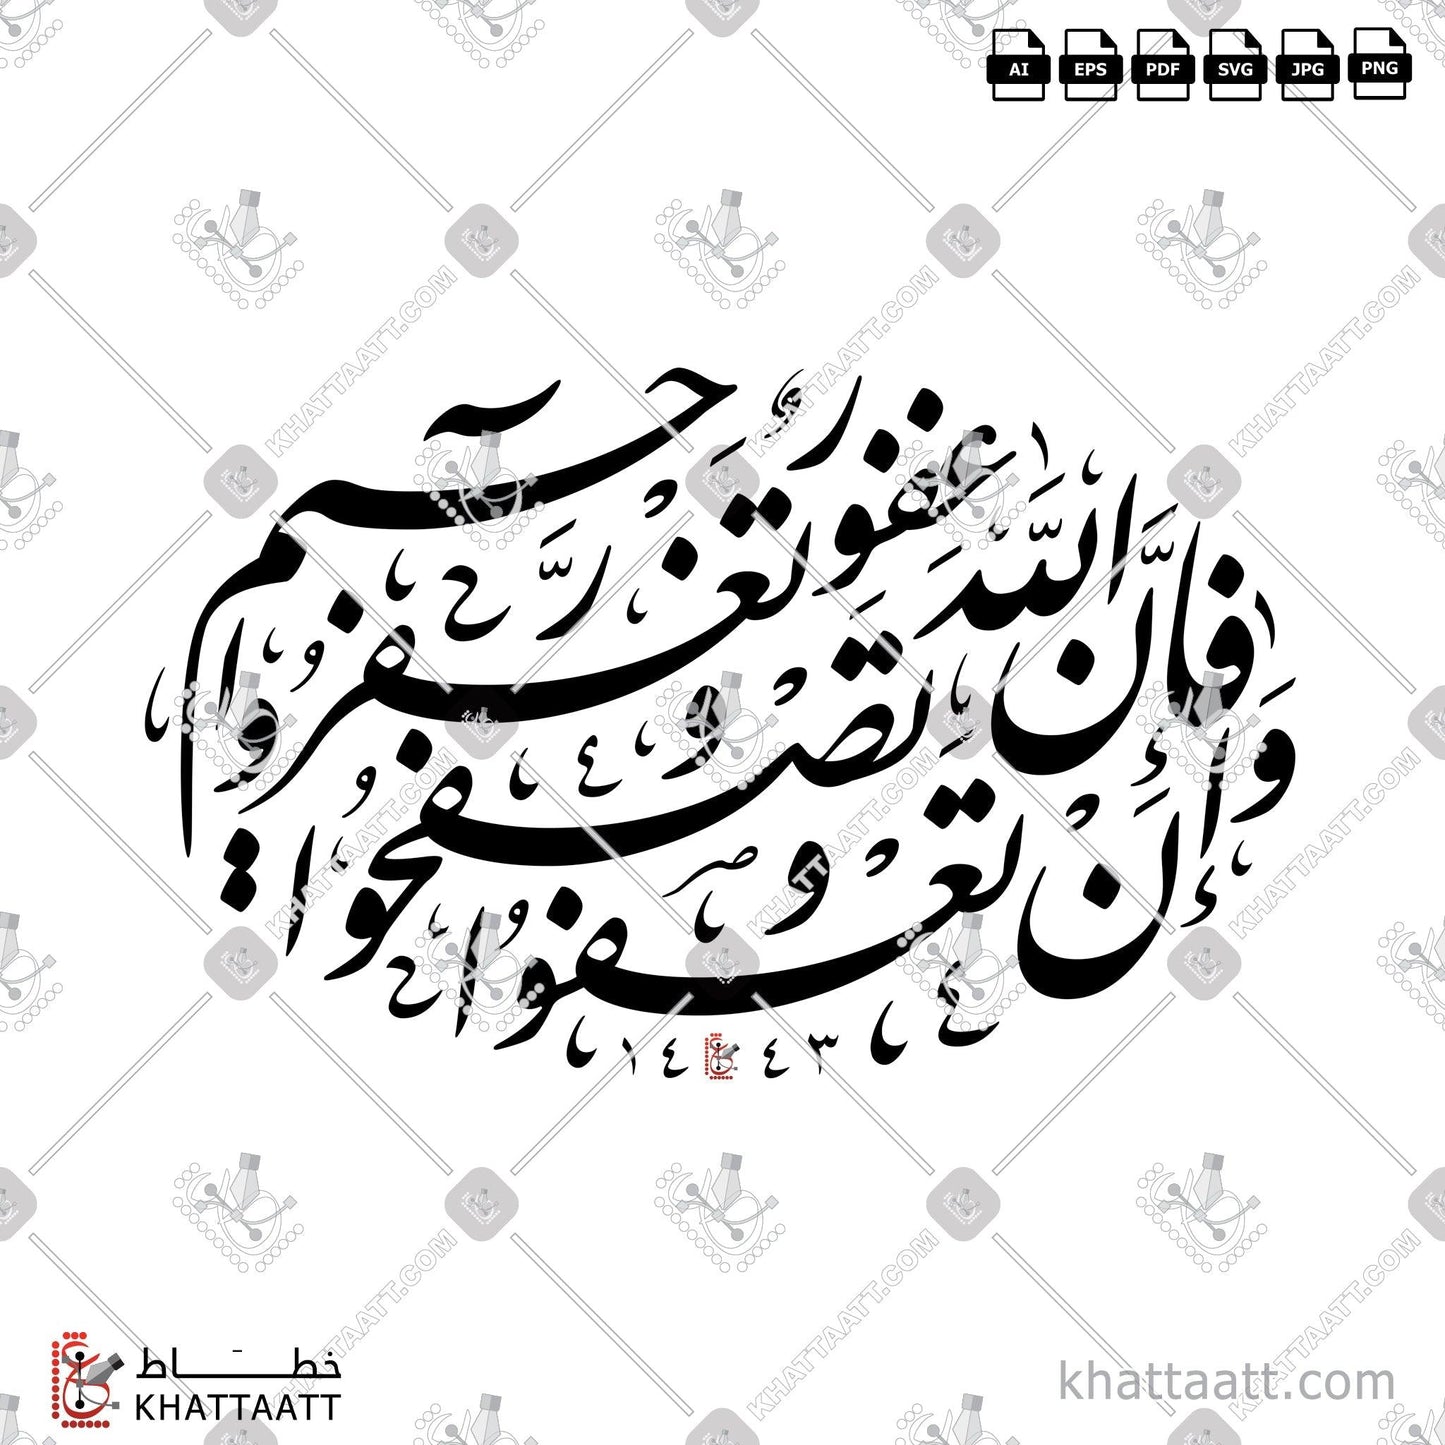 Download Arabic Calligraphy of وإن تعفوا وتصفحوا وتغفروا فإن الله غفور رحيم in Farsi - الخط الفارسي in vector and .png